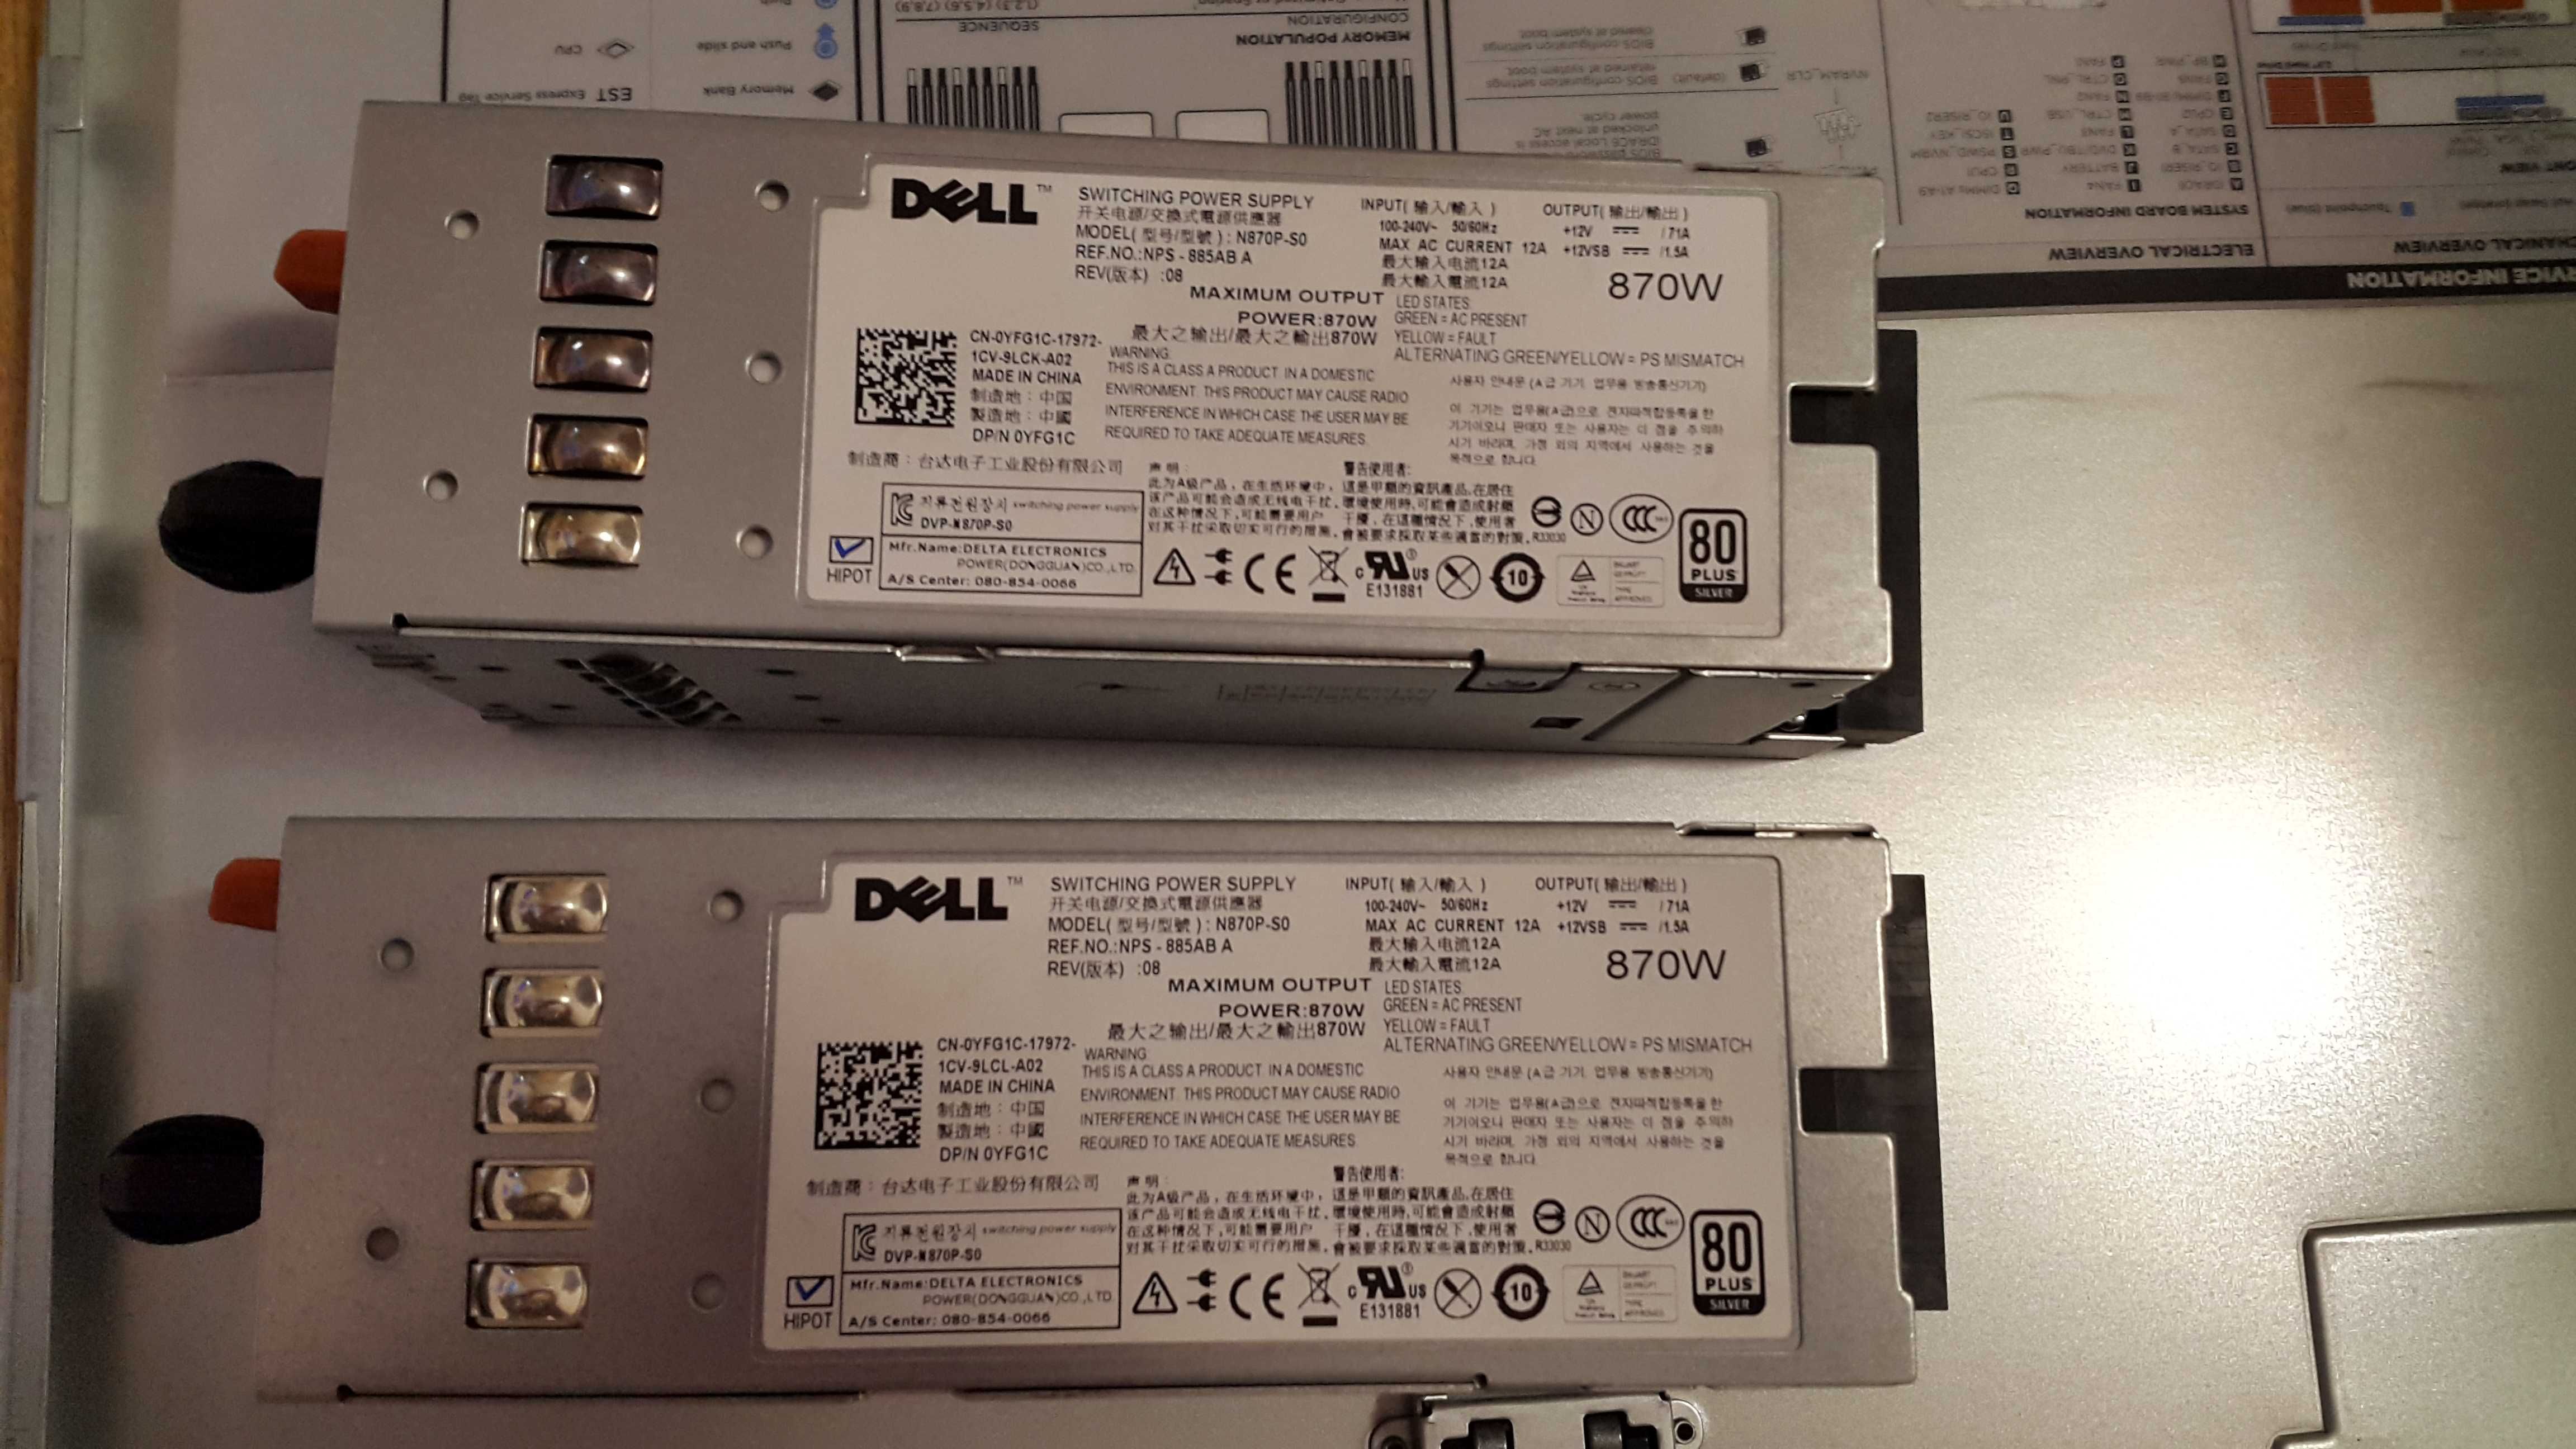 Server Dual CPU Xeon 12 Cores 24 Threads 6xHDD 4xGbE 2xPSU - Dell R710